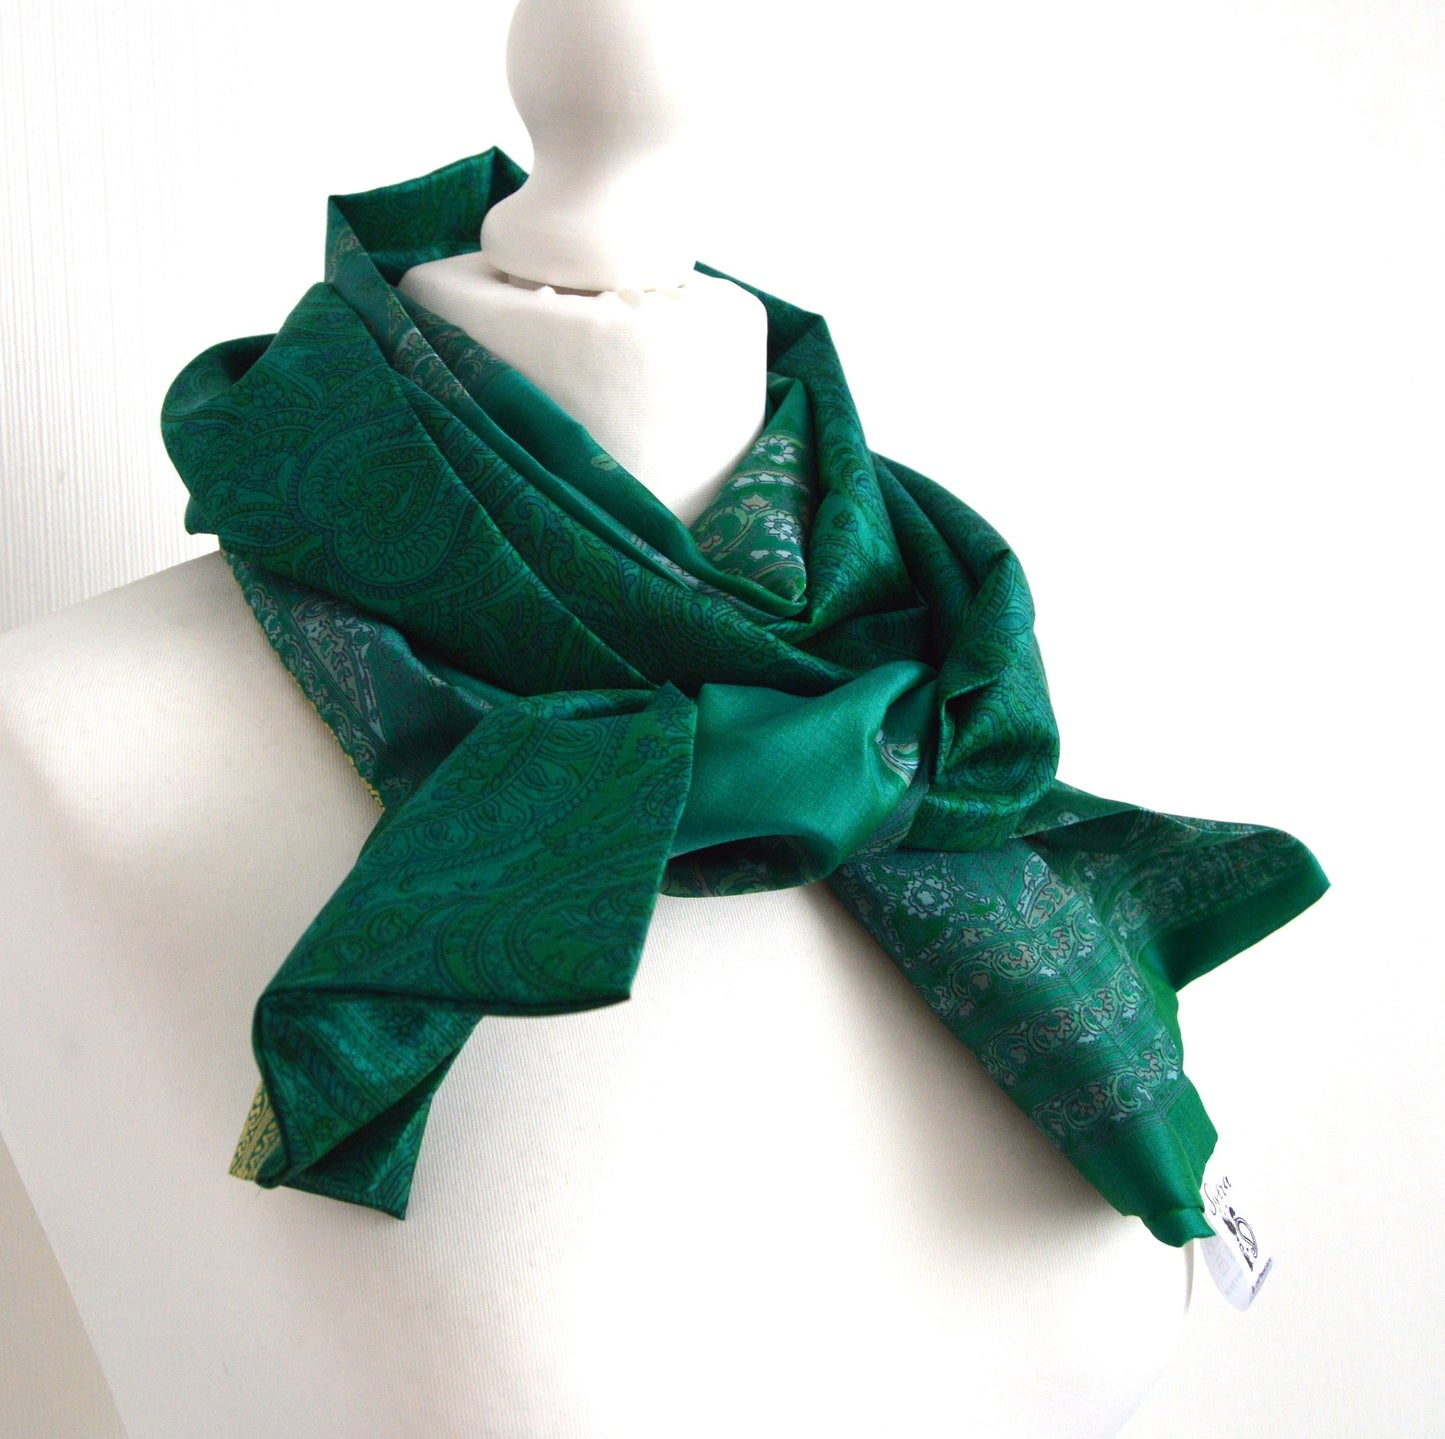 Teal Green Gold Upcycled Vintage Sari Silk Scarf